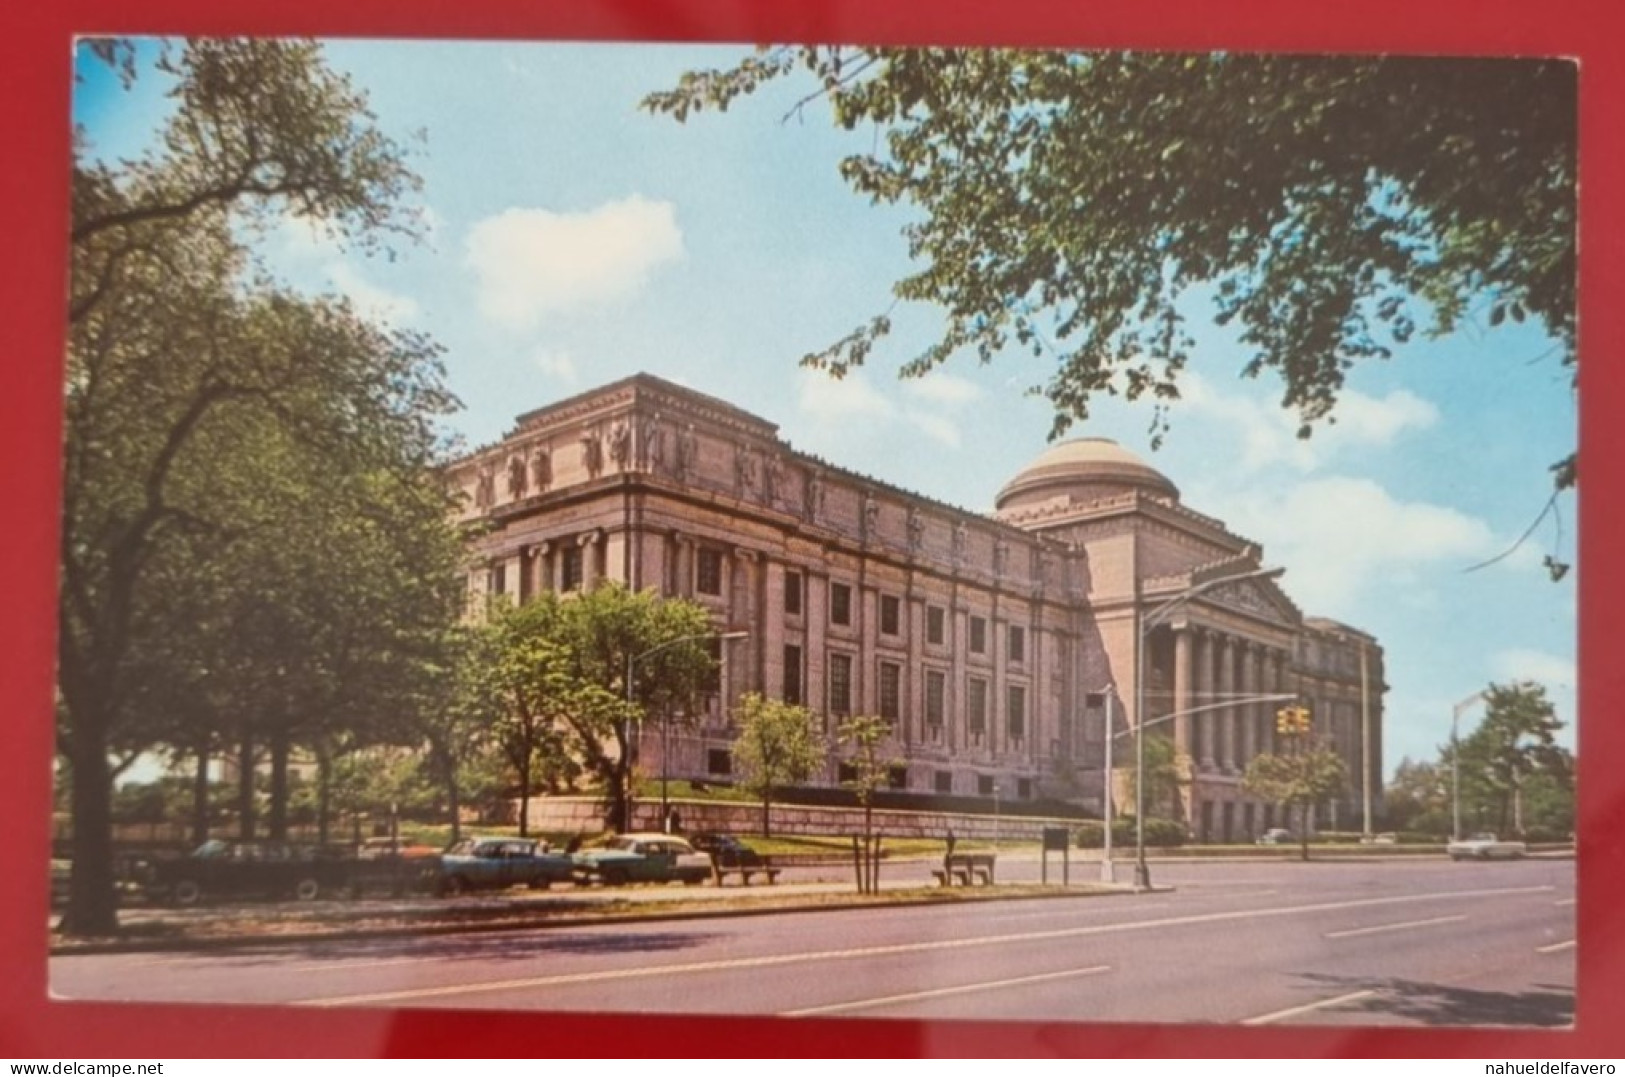 Uncirculated Postcard - USA - NY, NEW YORK CITY - BROOKLYN MUSEUM - Museen